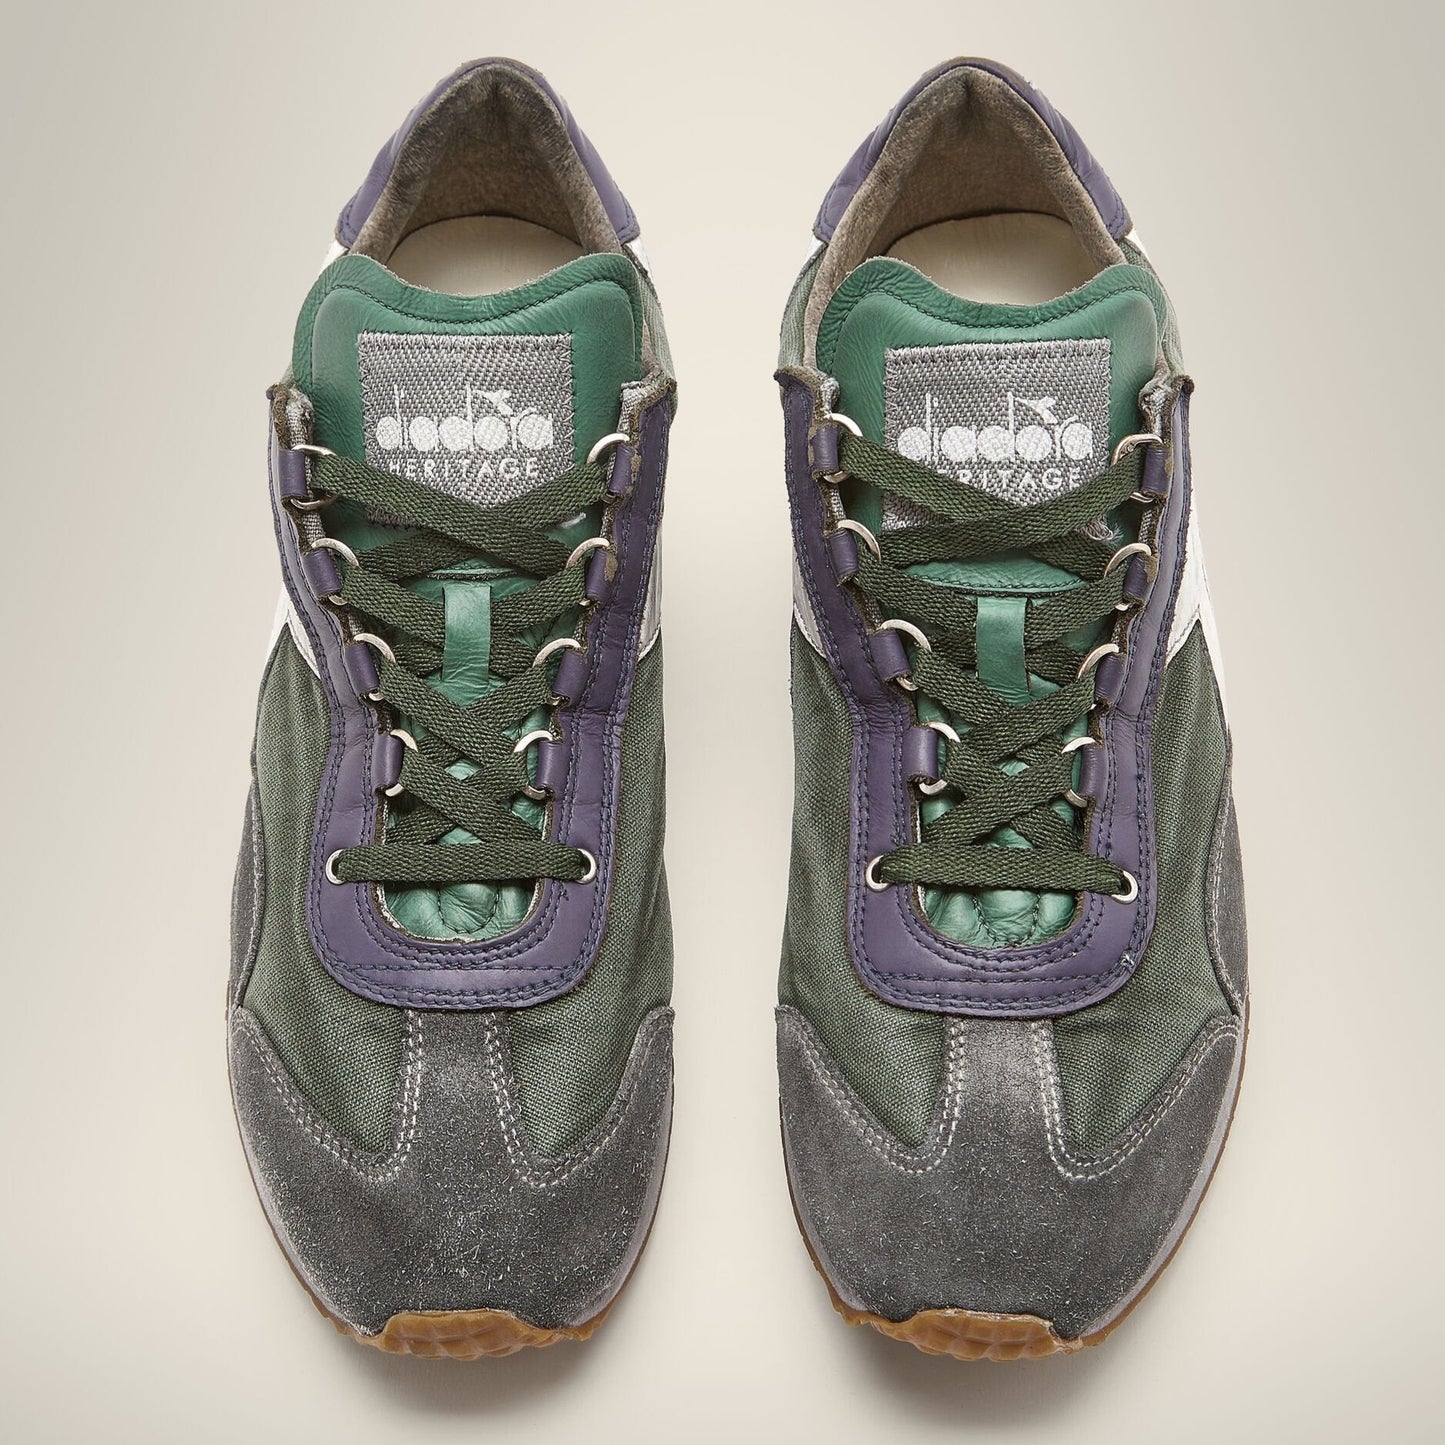 Sneakers De La Marca Diadora Para Unisex Modelo Equipe H Dirty Stone Wash EvoEn Color Verde